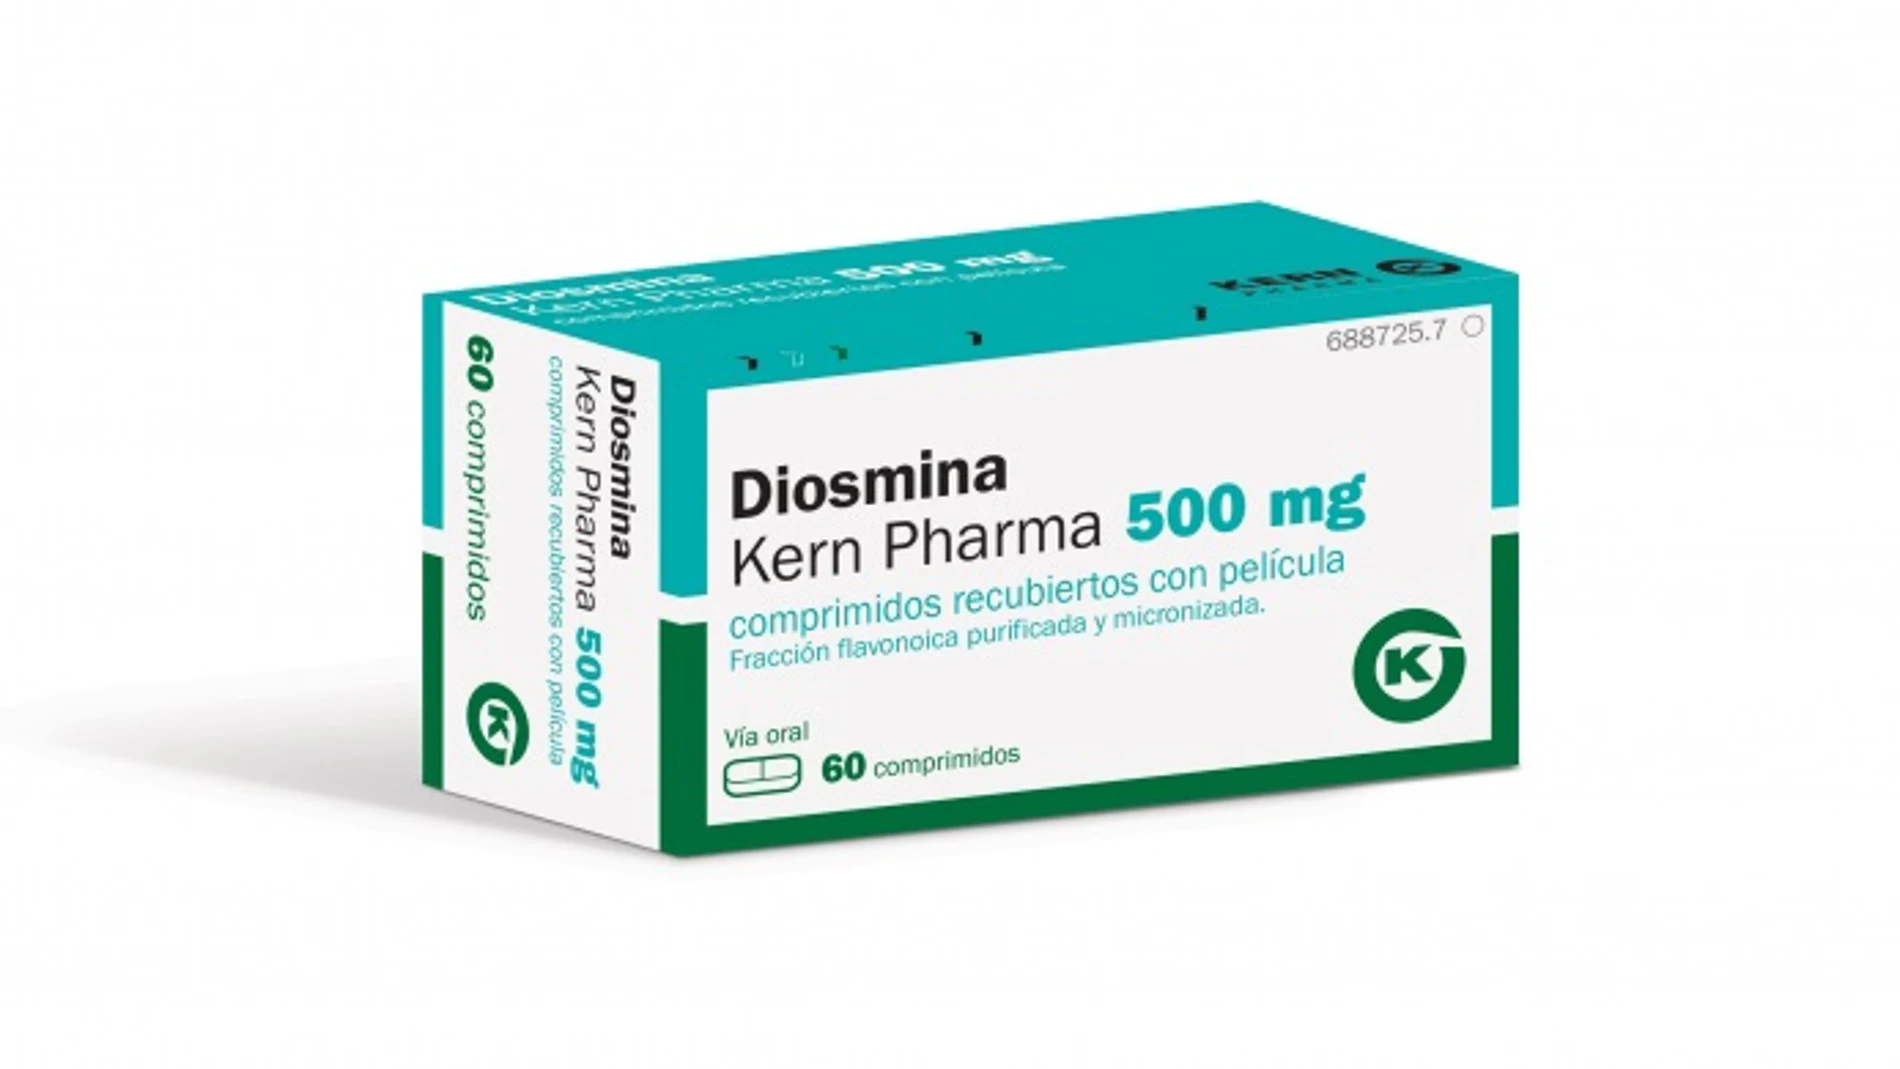 Diosmina, de Kern Pharma KERN PHARMA (Foto de ARCHIVO)